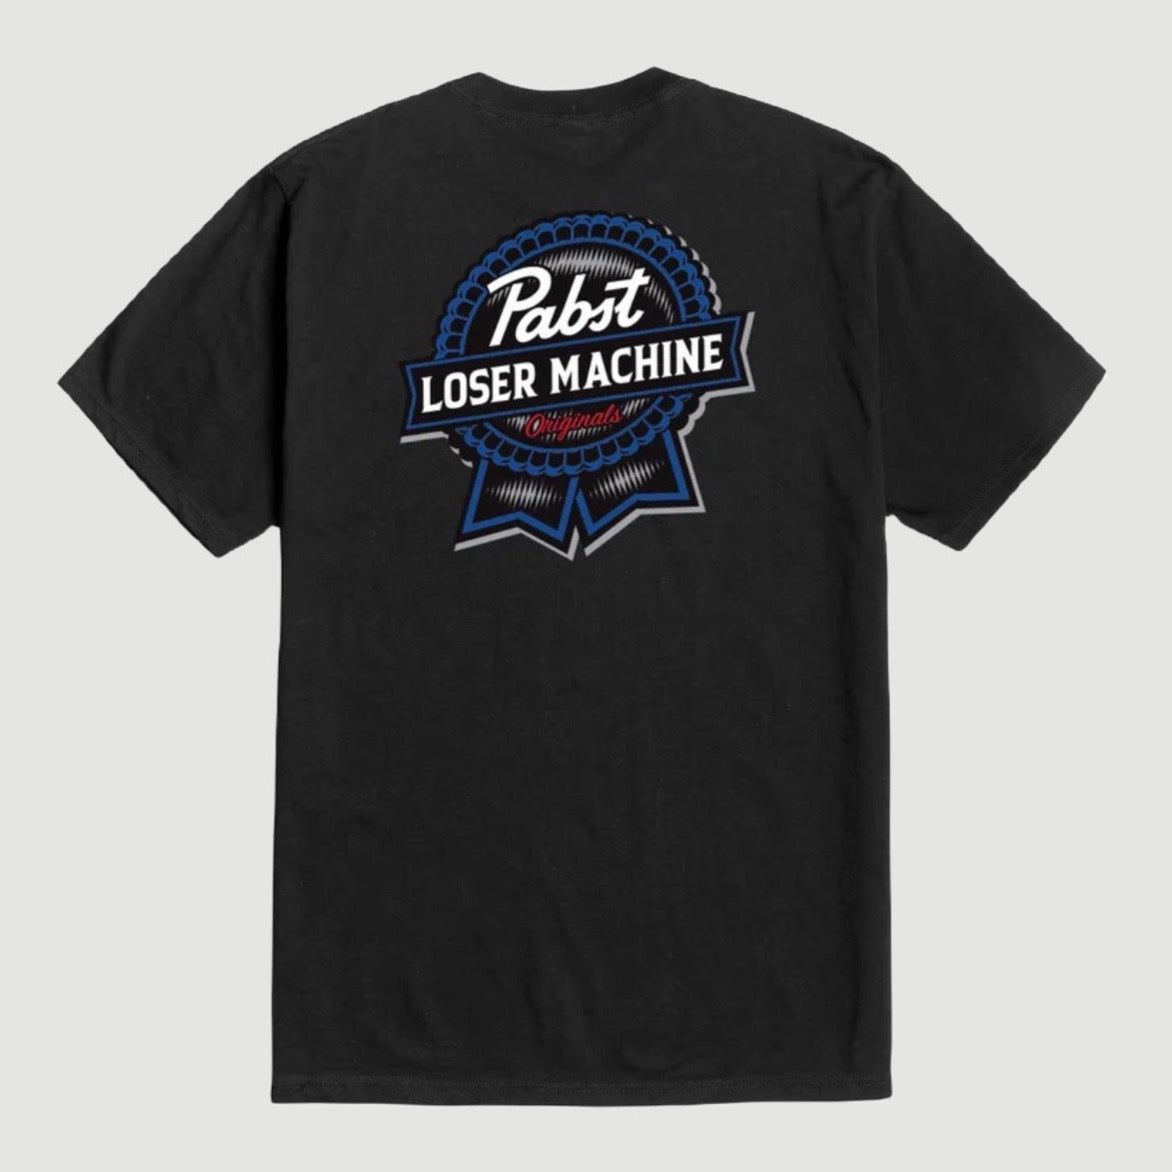 Loser Machine LMC Scoreboard Tee Black